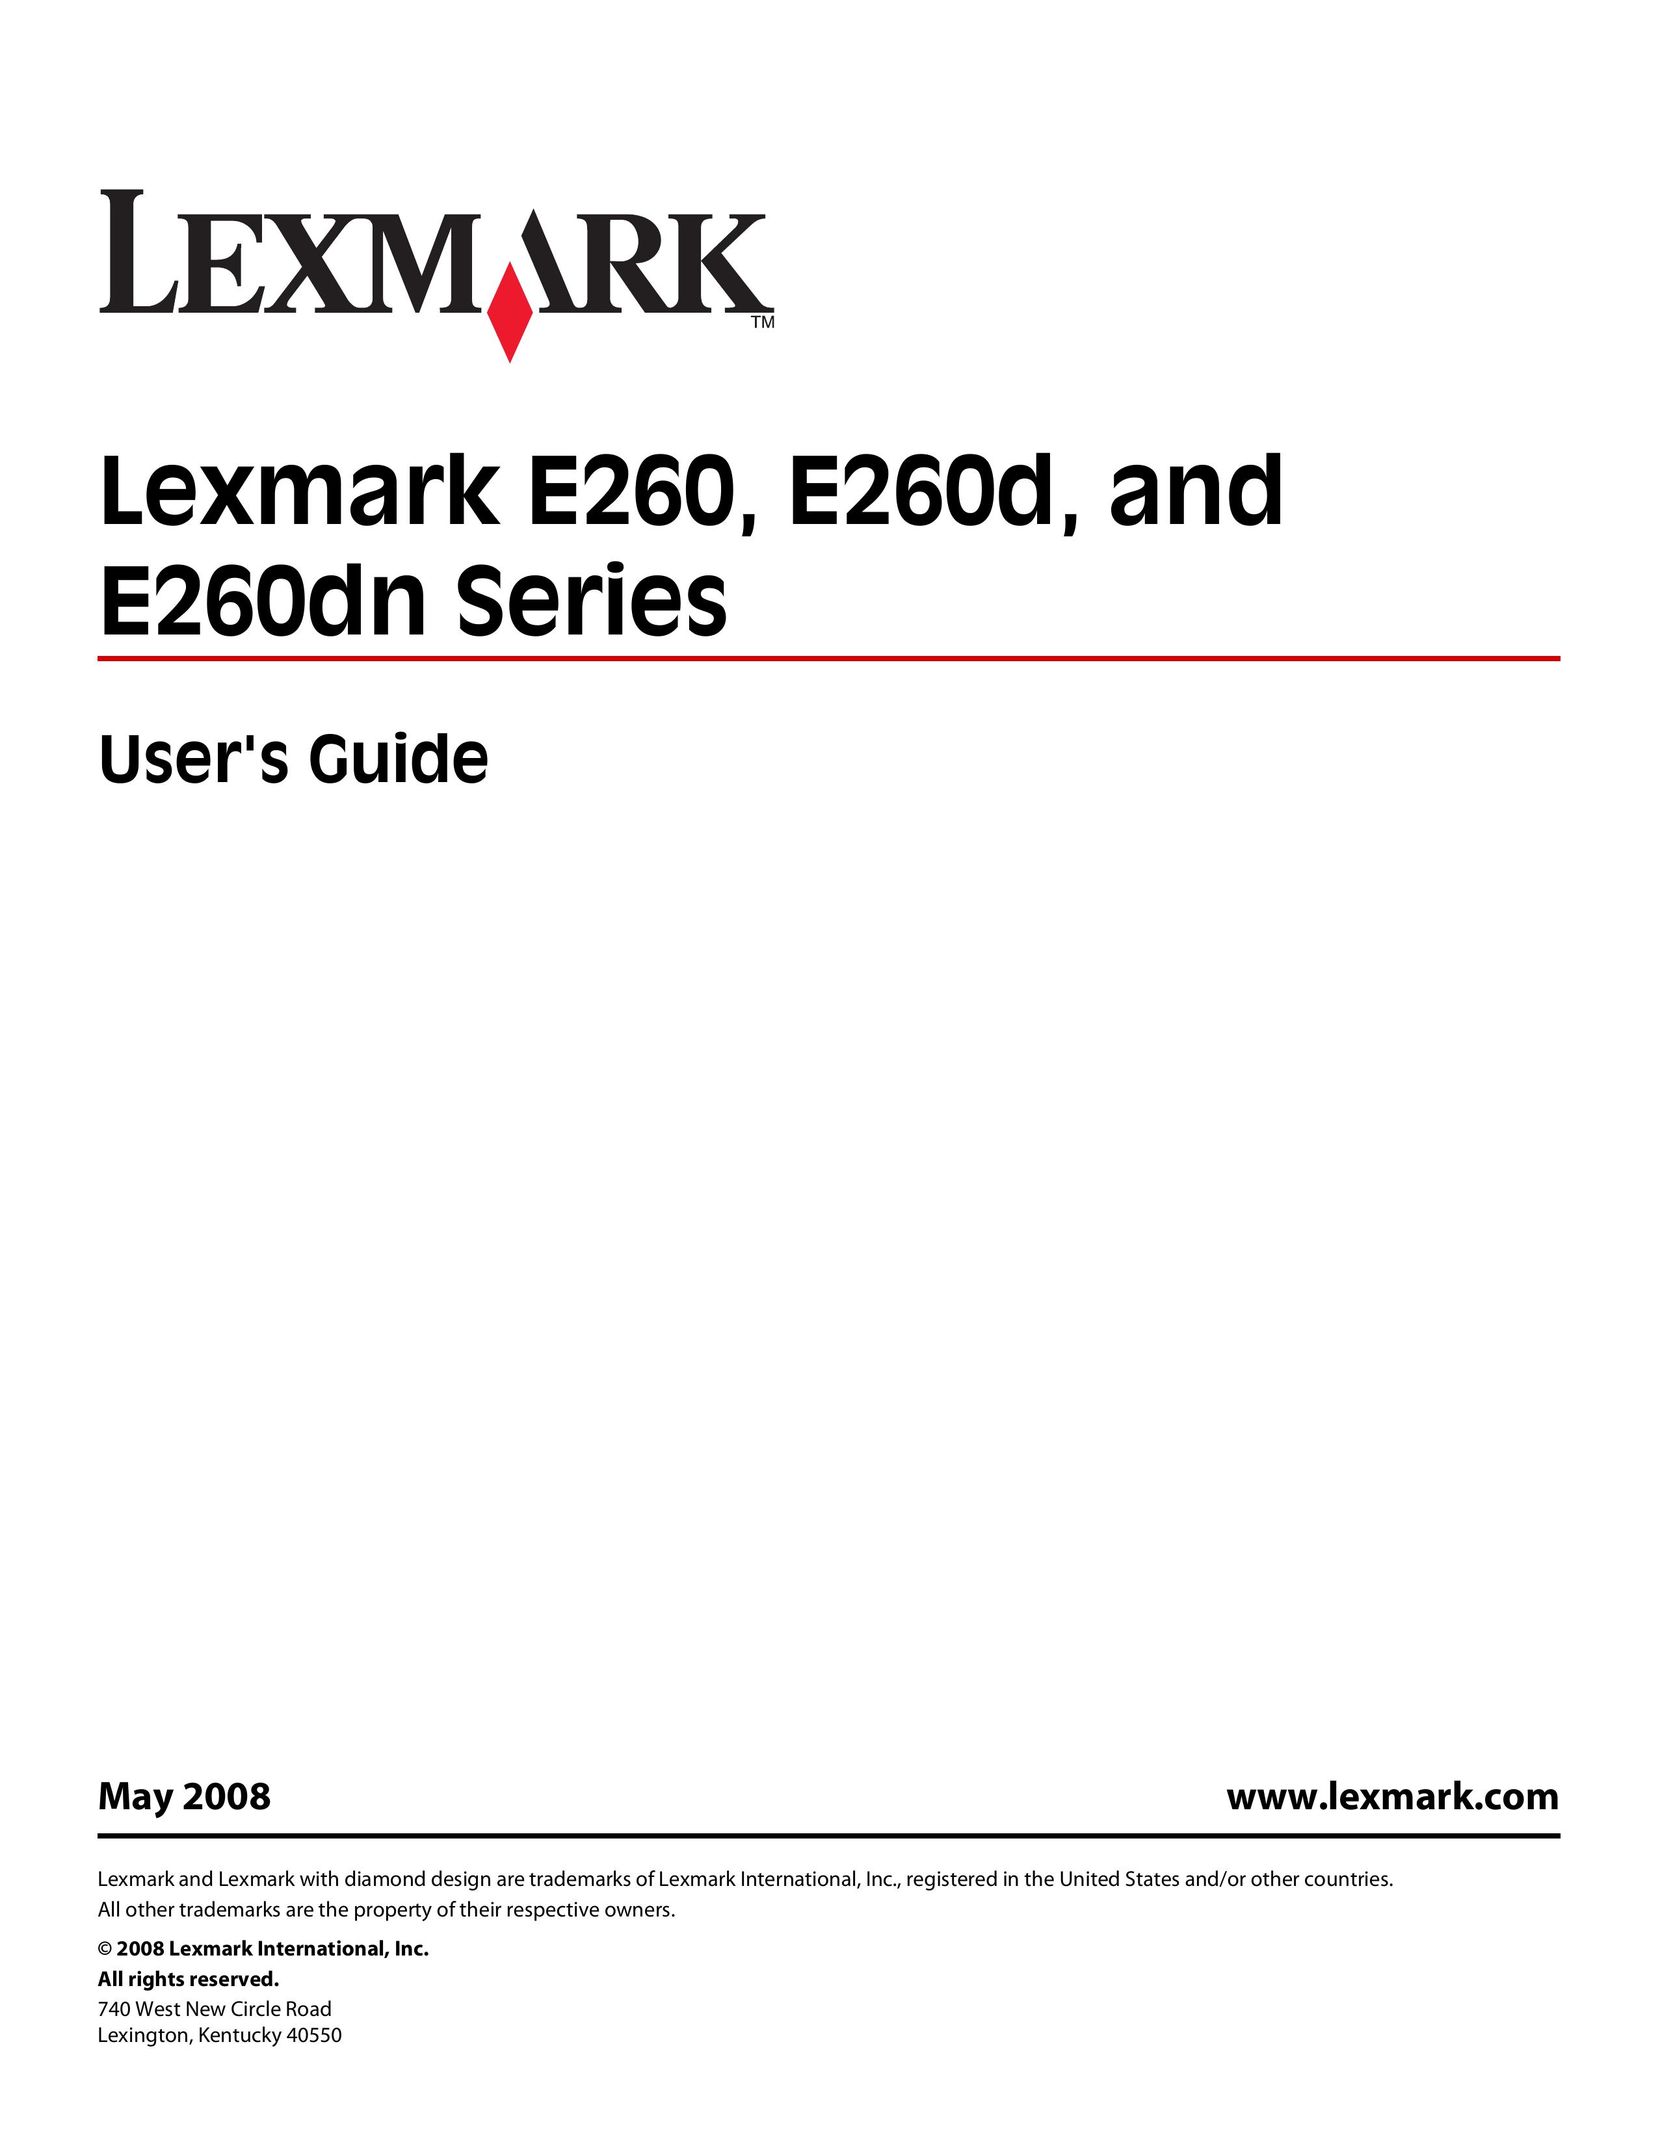 Minolta E260 Printer User Manual